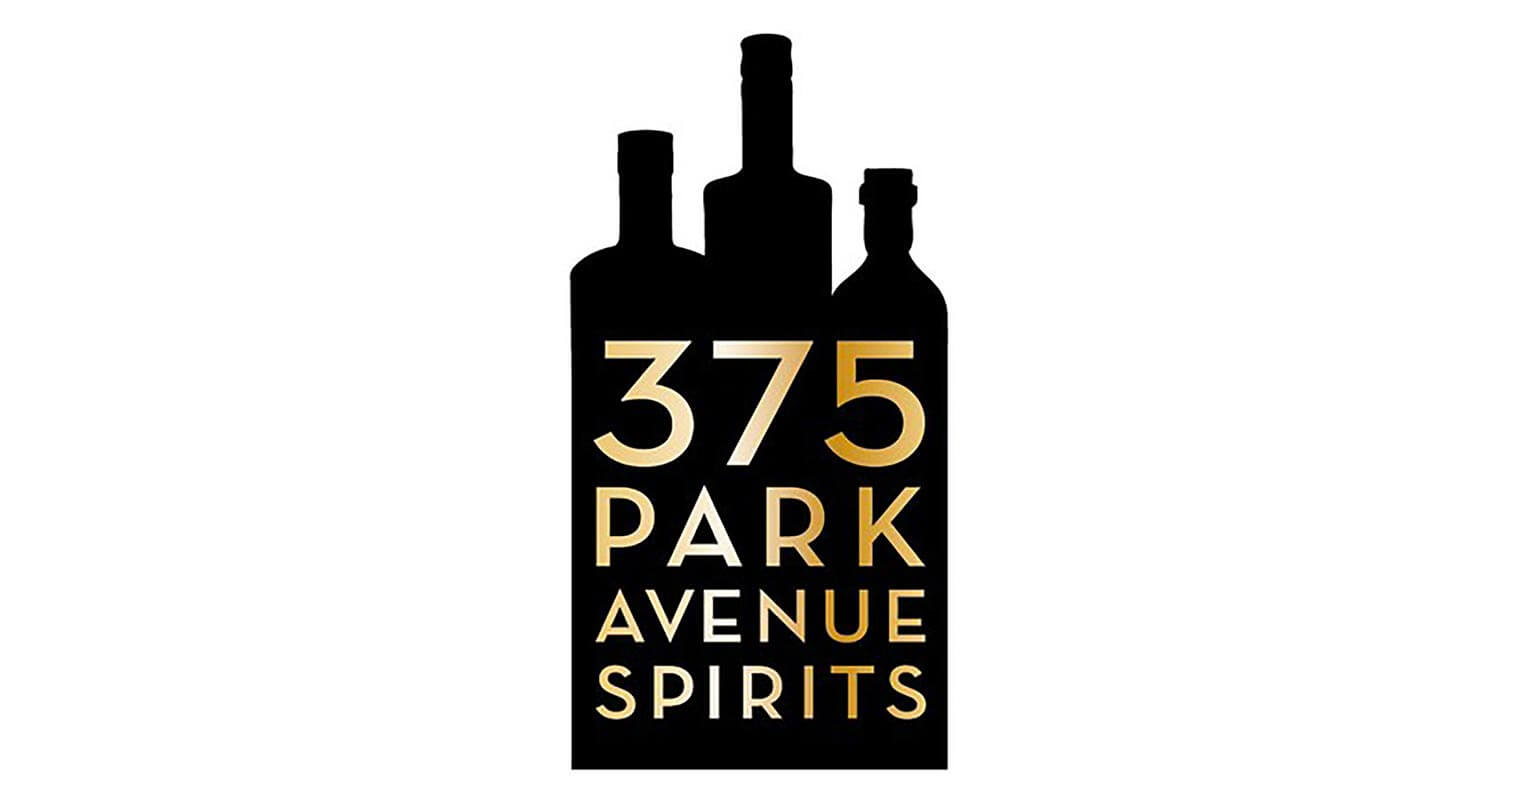 375 Park Avenue Spirits, logo on white, featured image